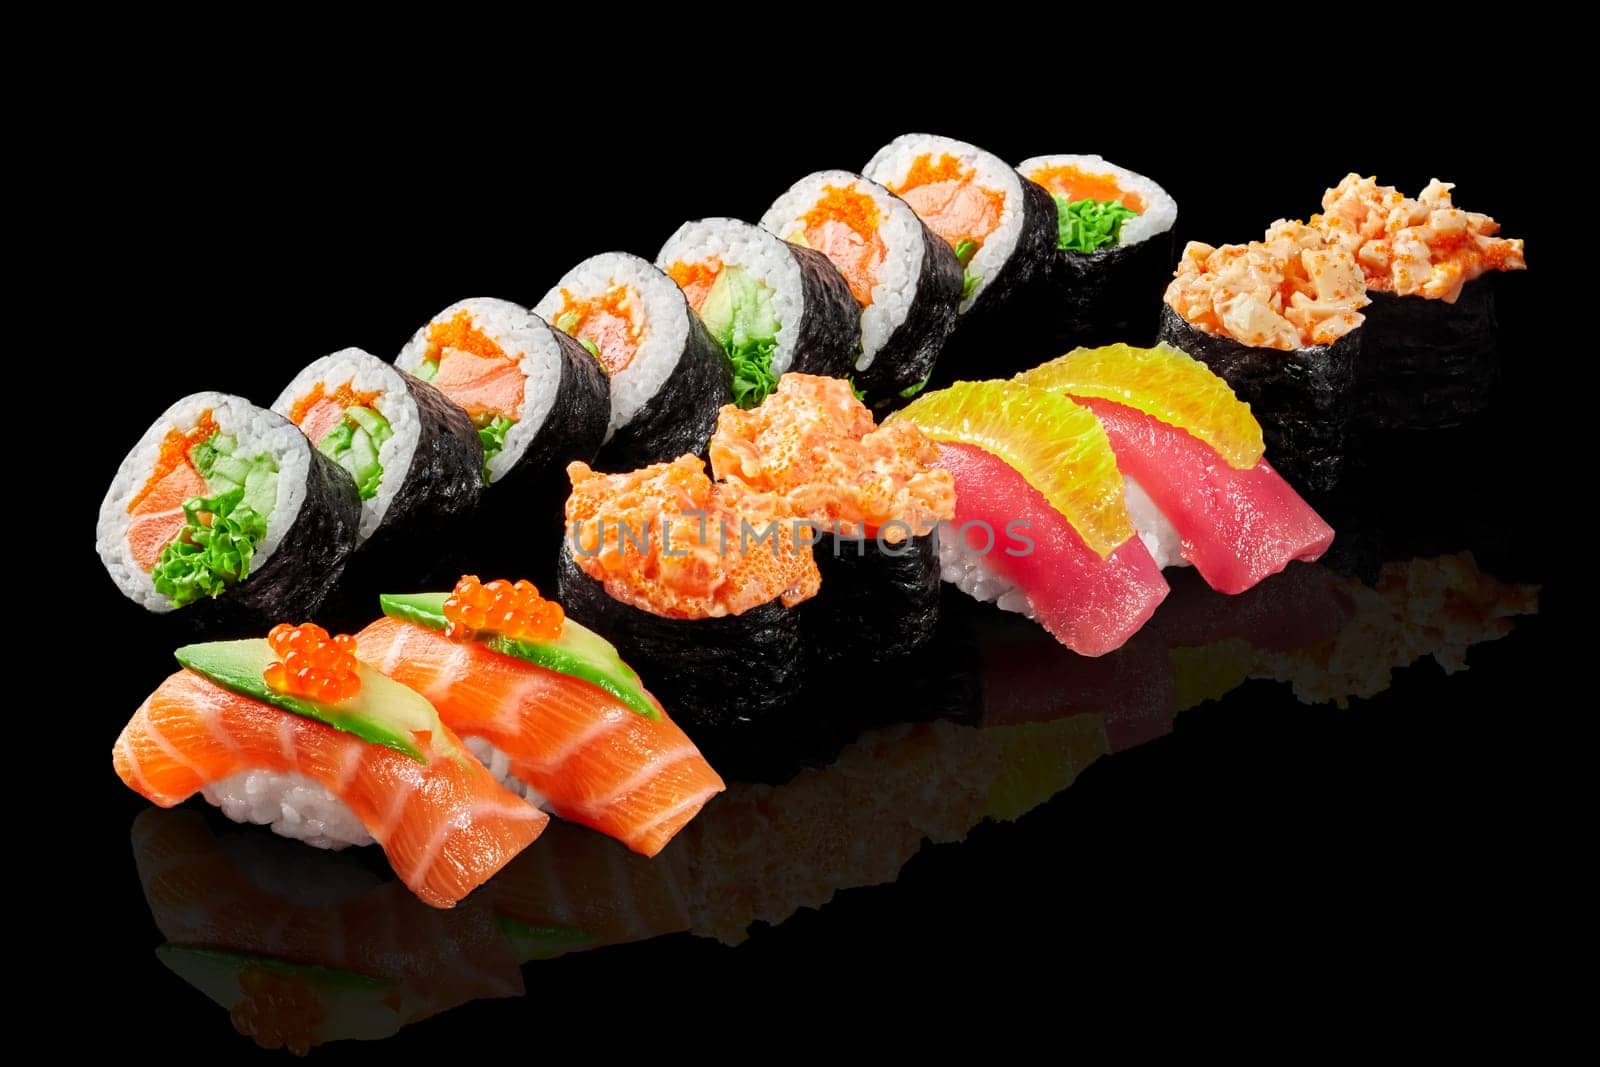 Set of futomaki, gunkan maki and nigiri sushi with salmon and tuna by nazarovsergey